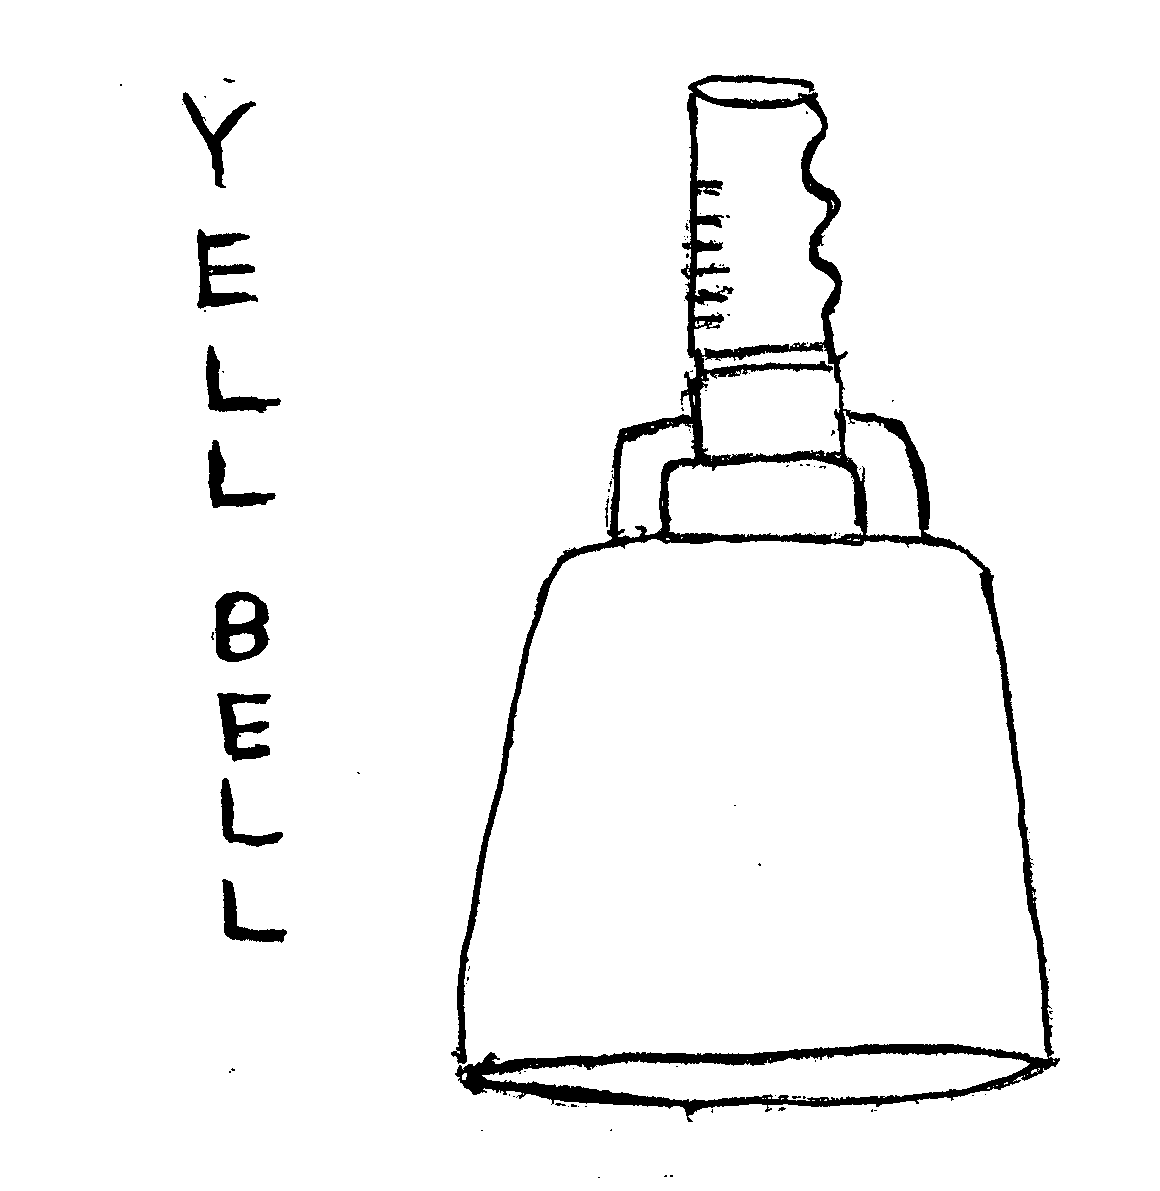  YELL BELL